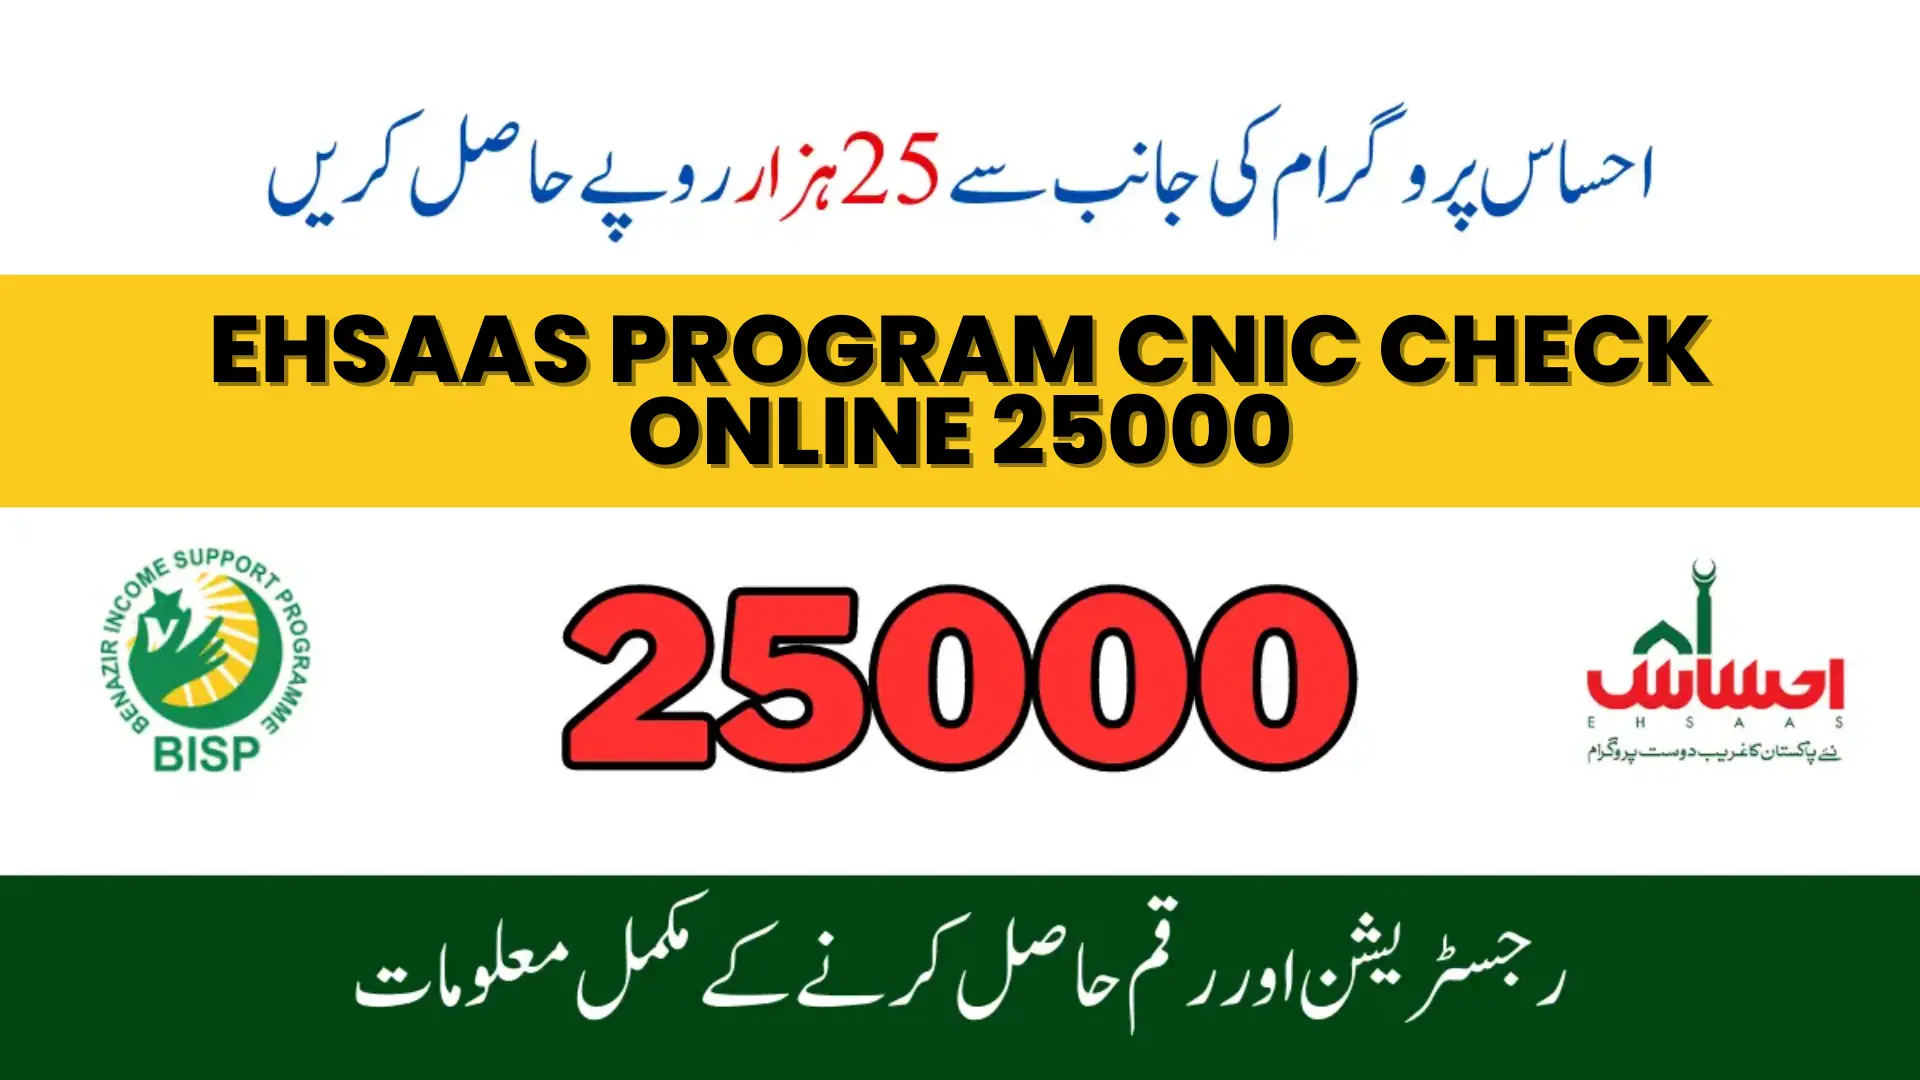 Ehsaas Program CNIC Check Online 25000